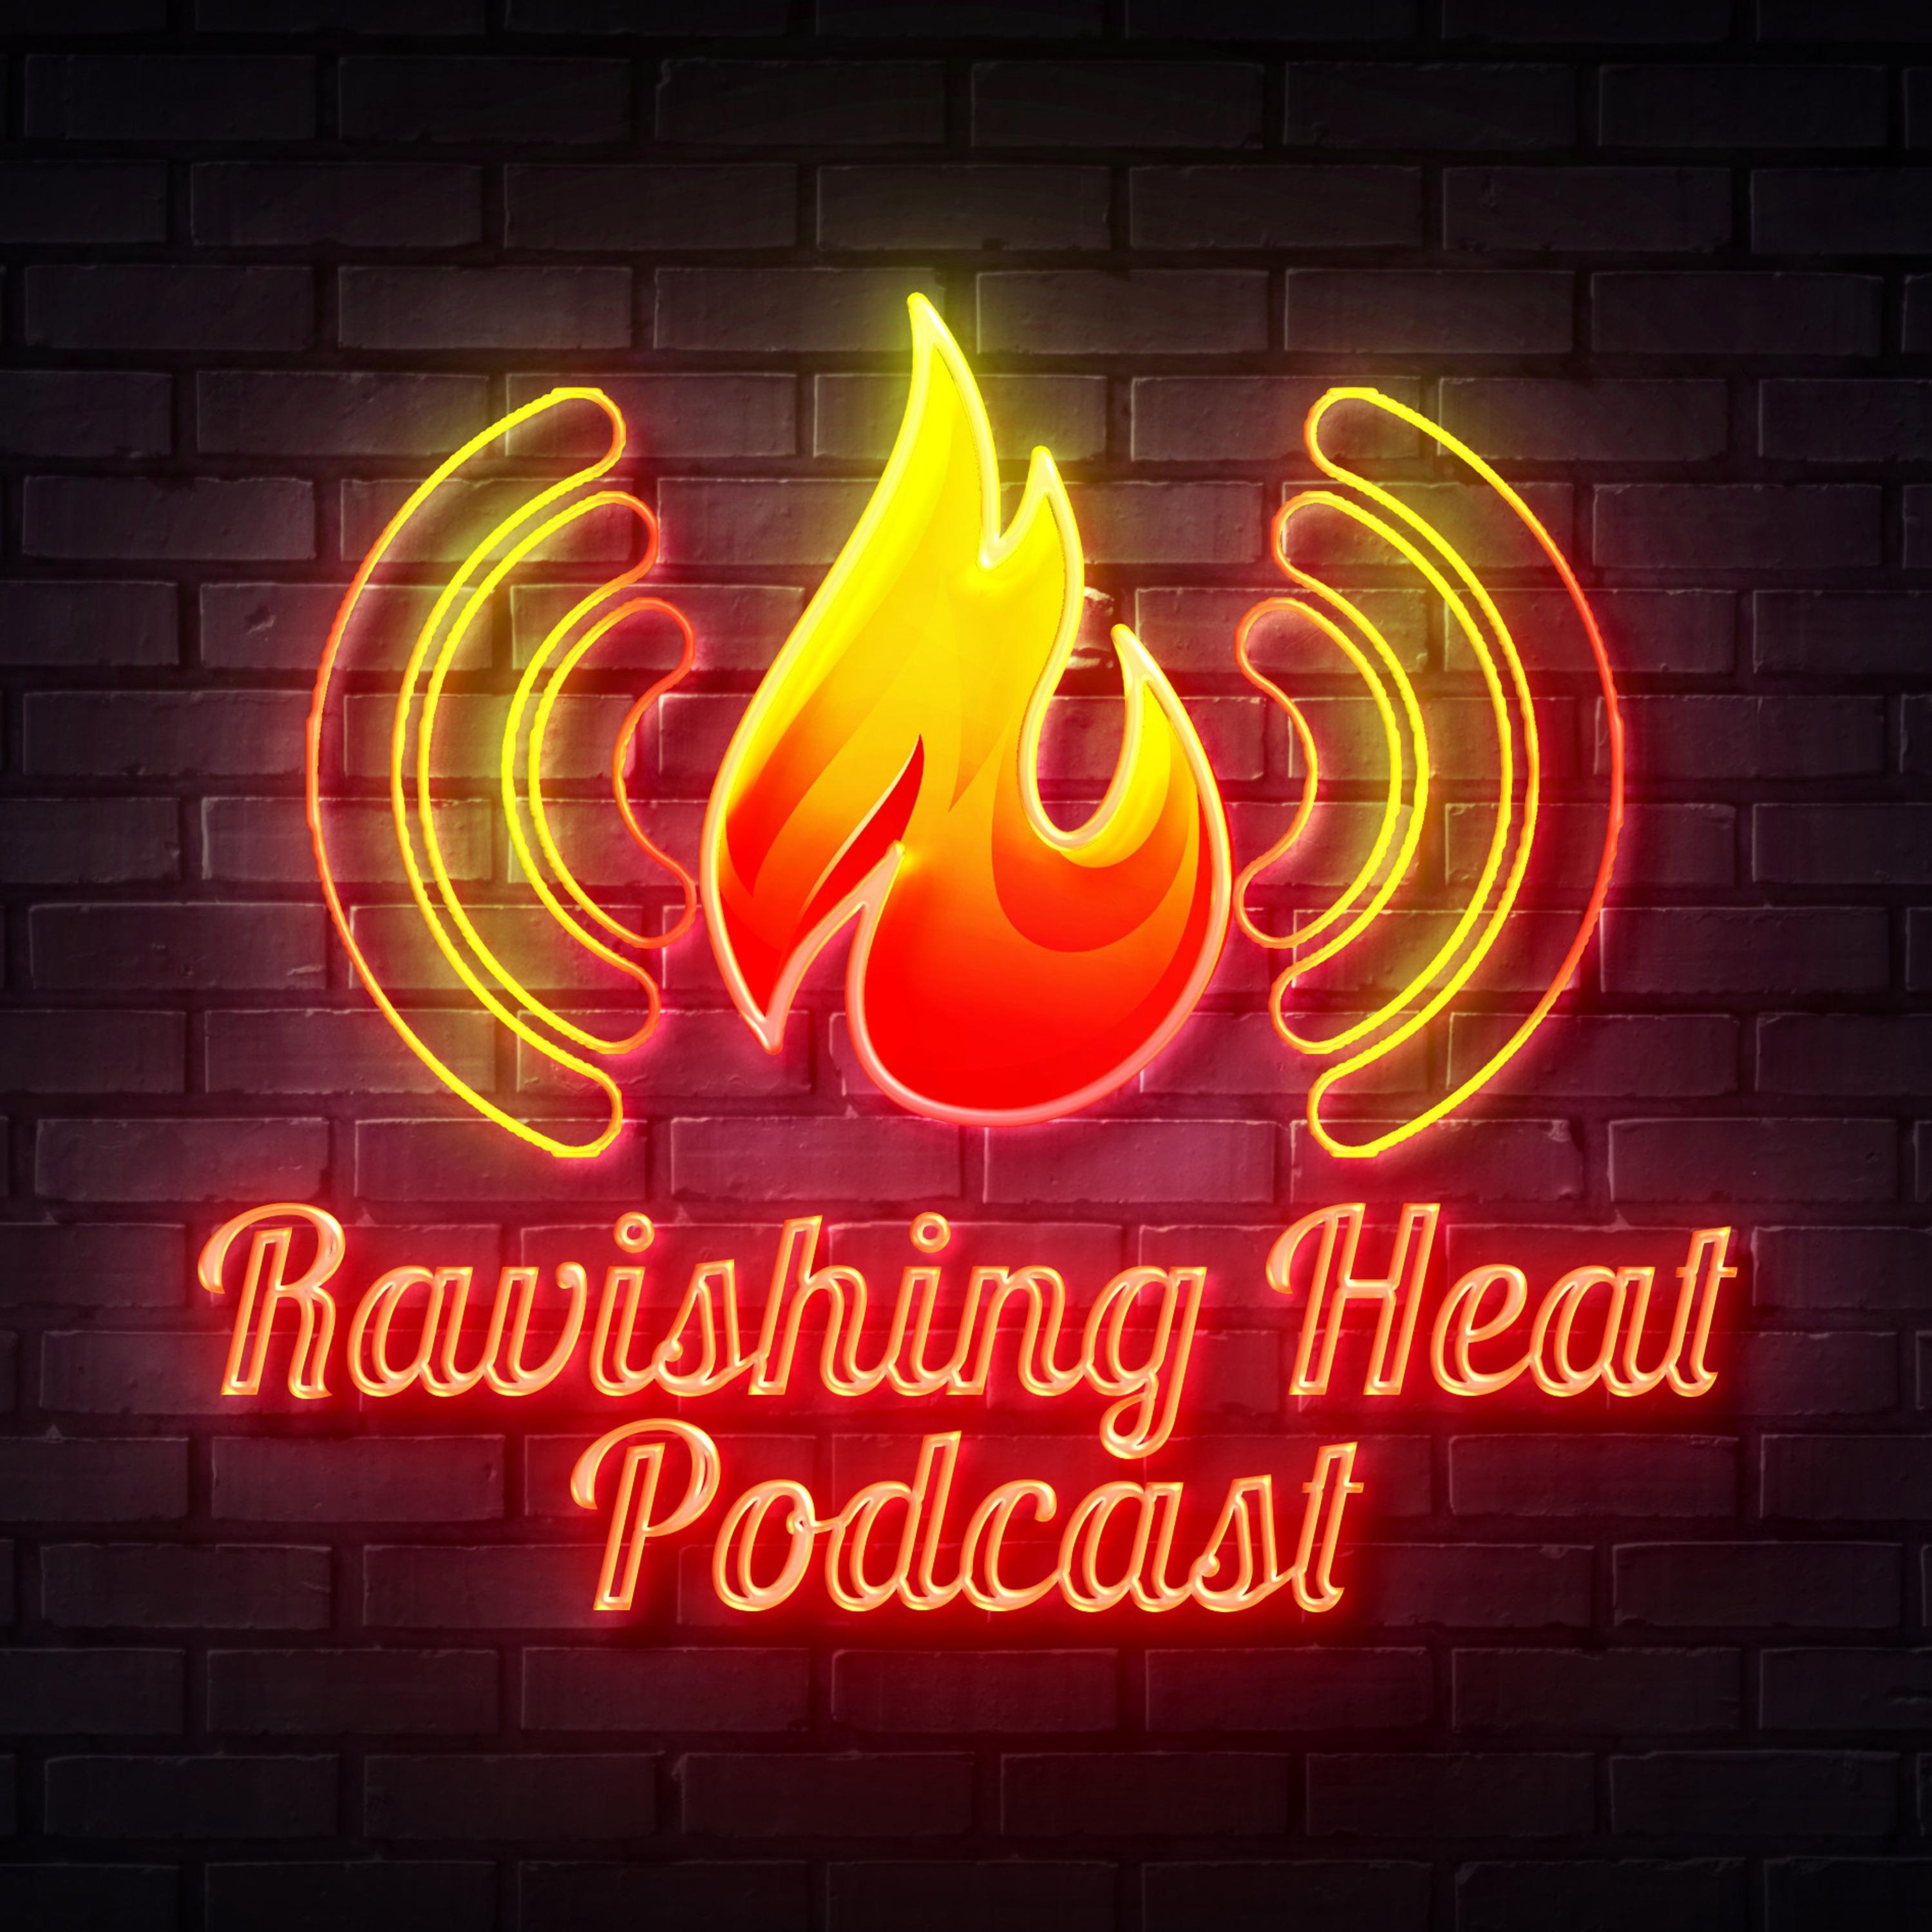 The Ravishing Heat Podcast